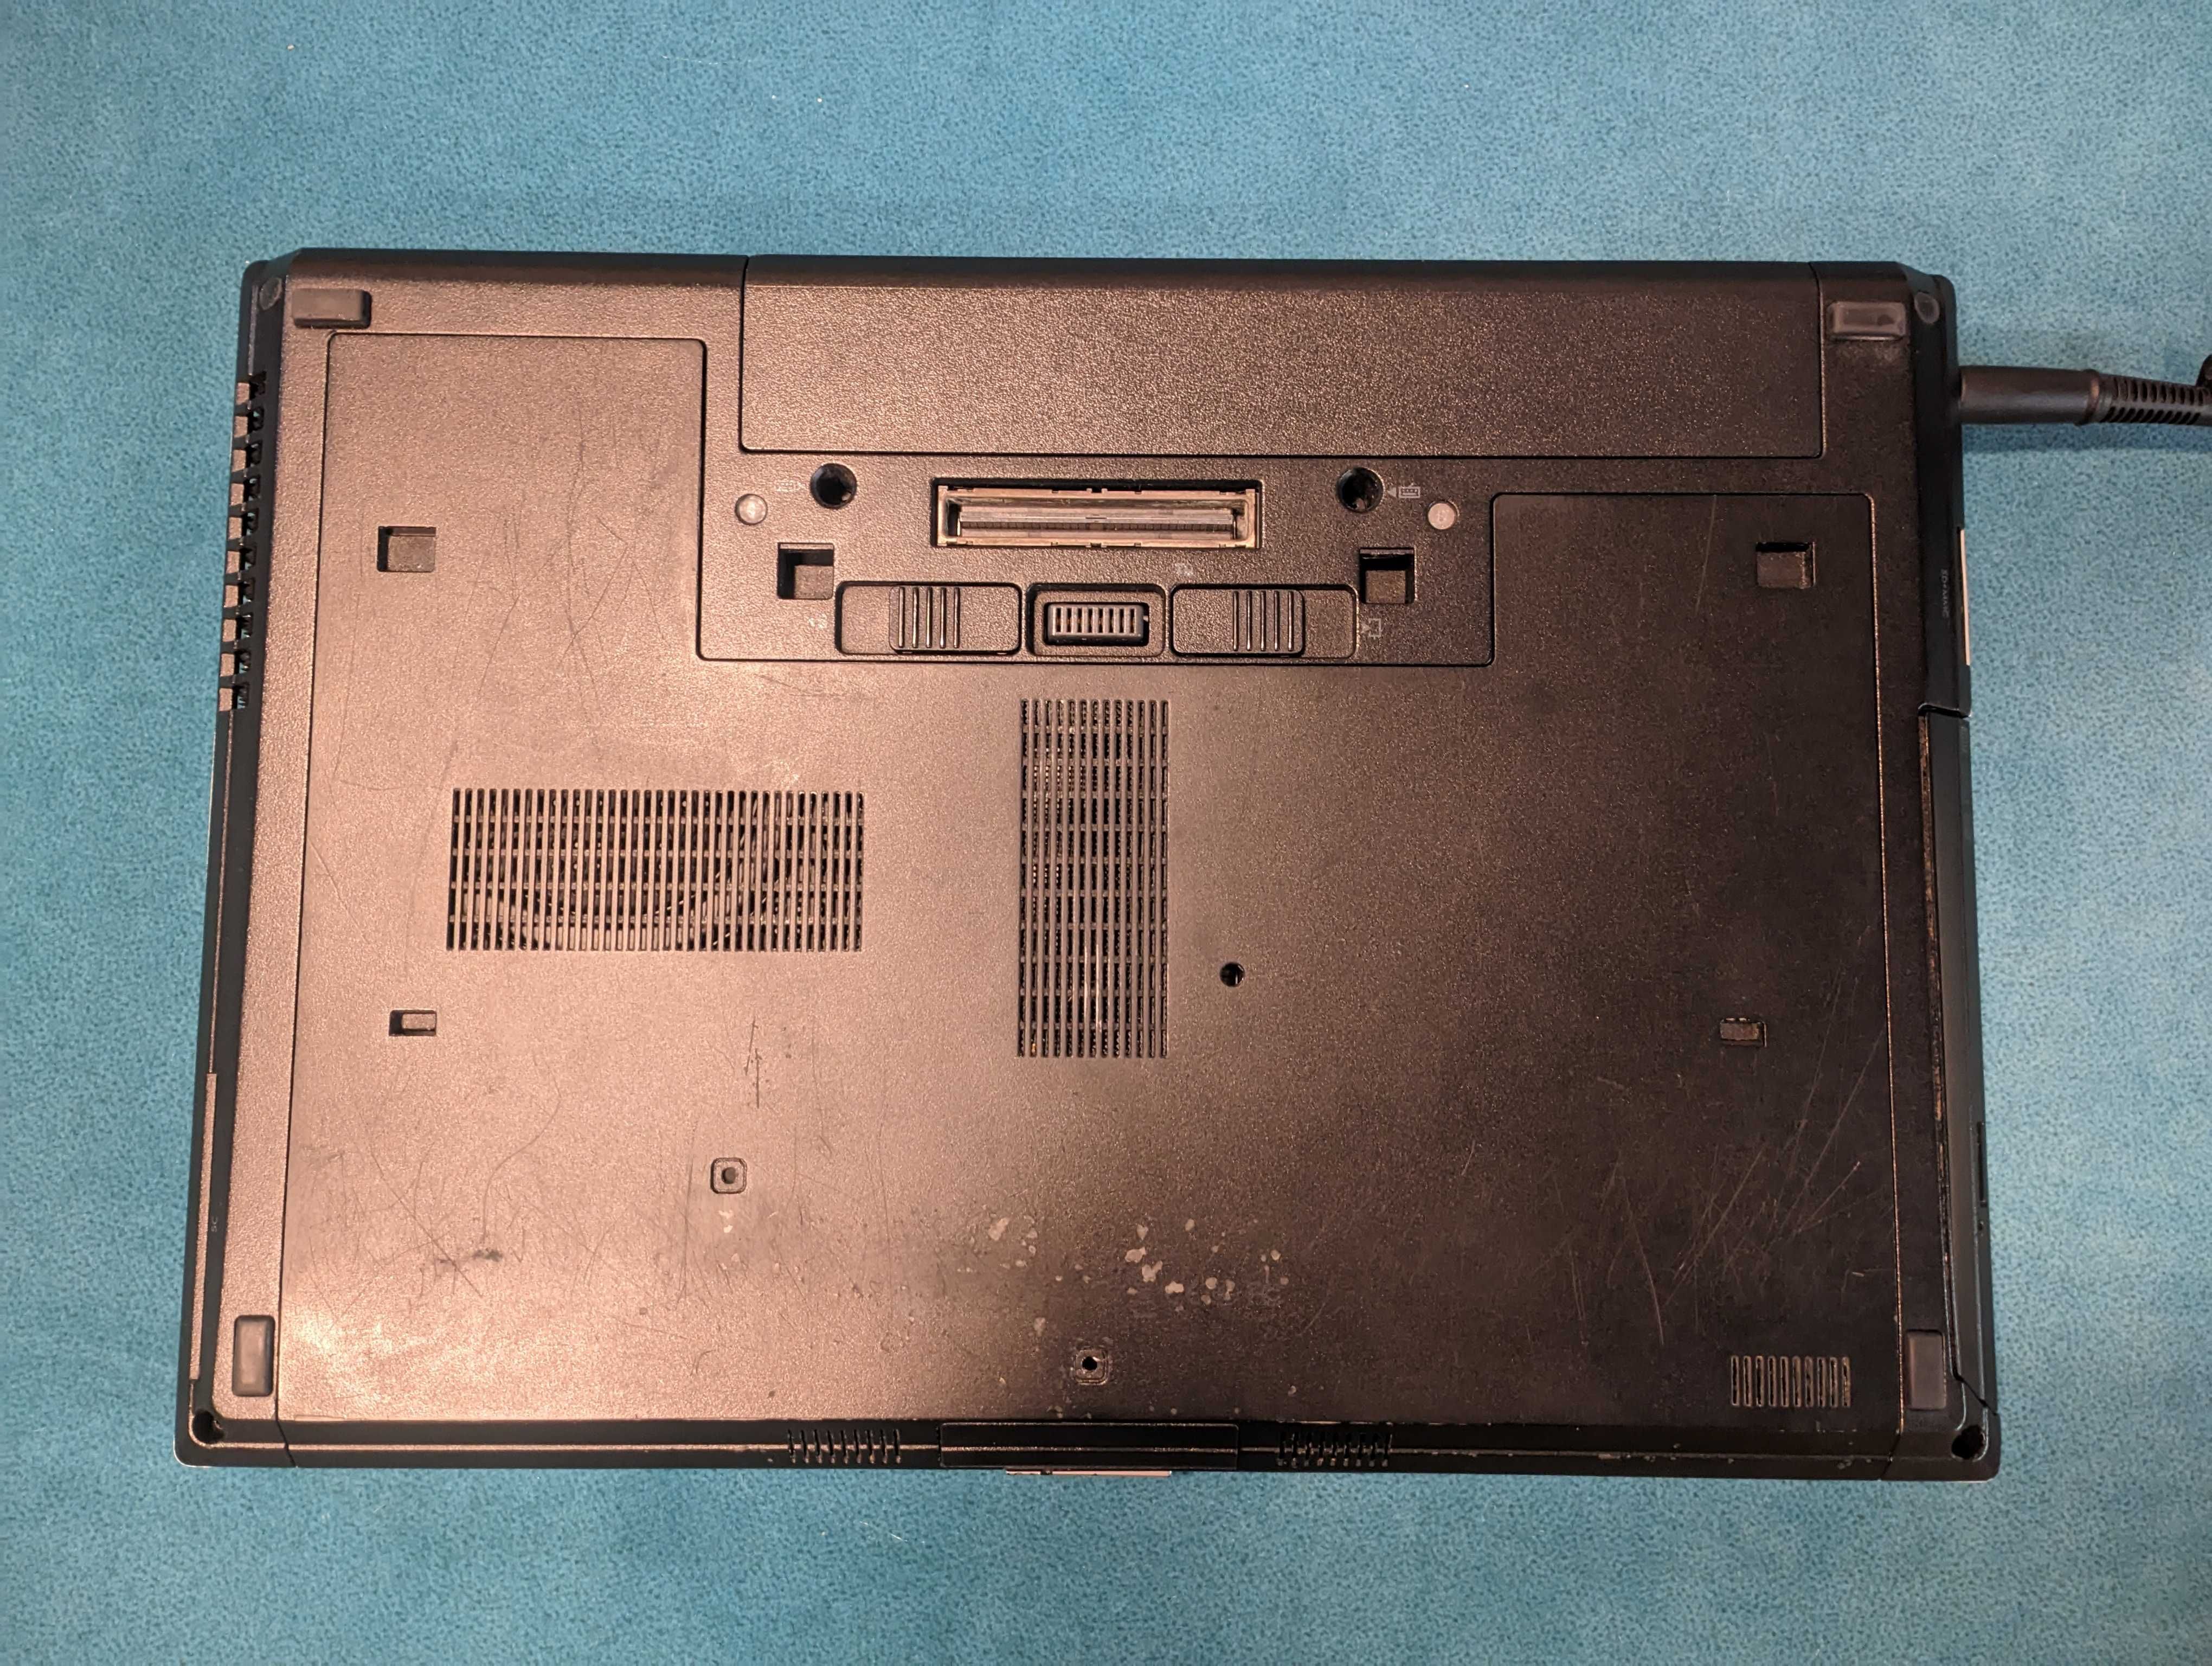 Лаптоп HP 8470p i5 8gb SSD